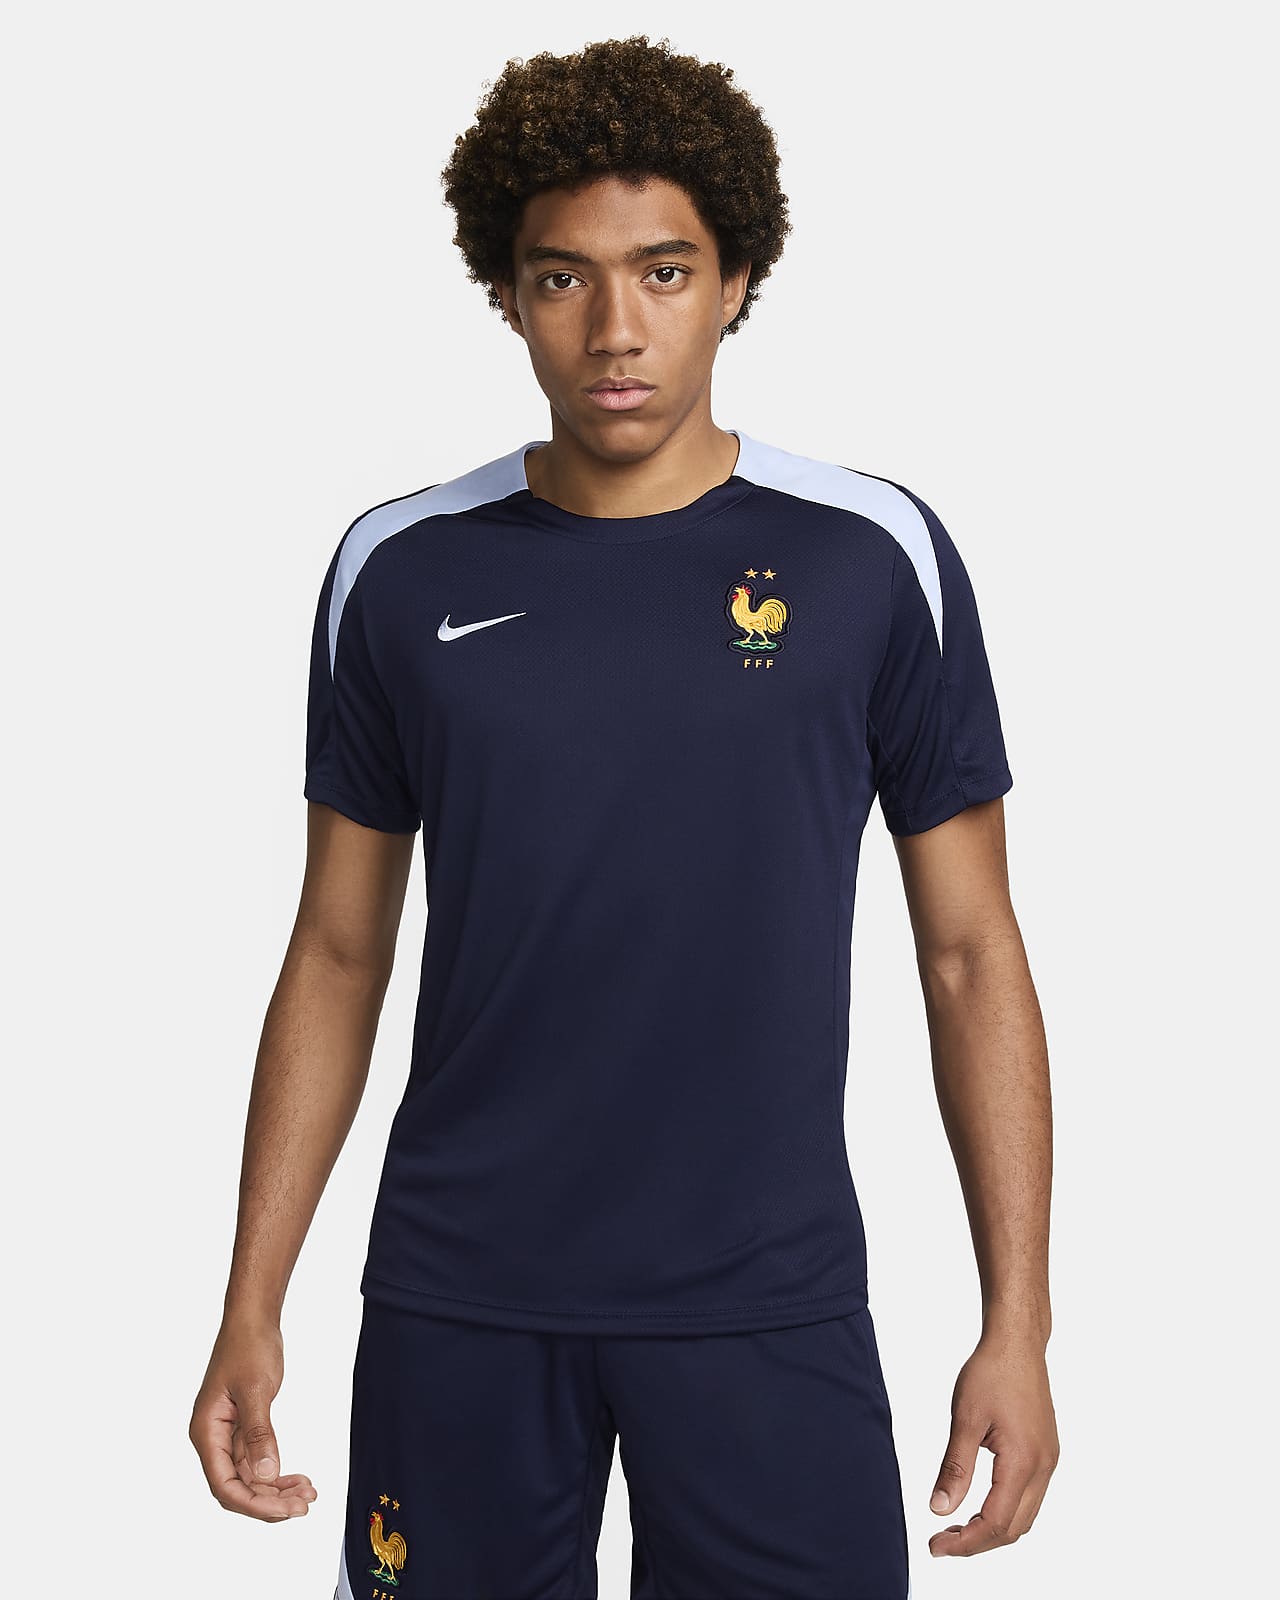 Męska dzianinowa koszulka piłkarska z krótkim rękawem Nike Dri-FIT FFF Strike